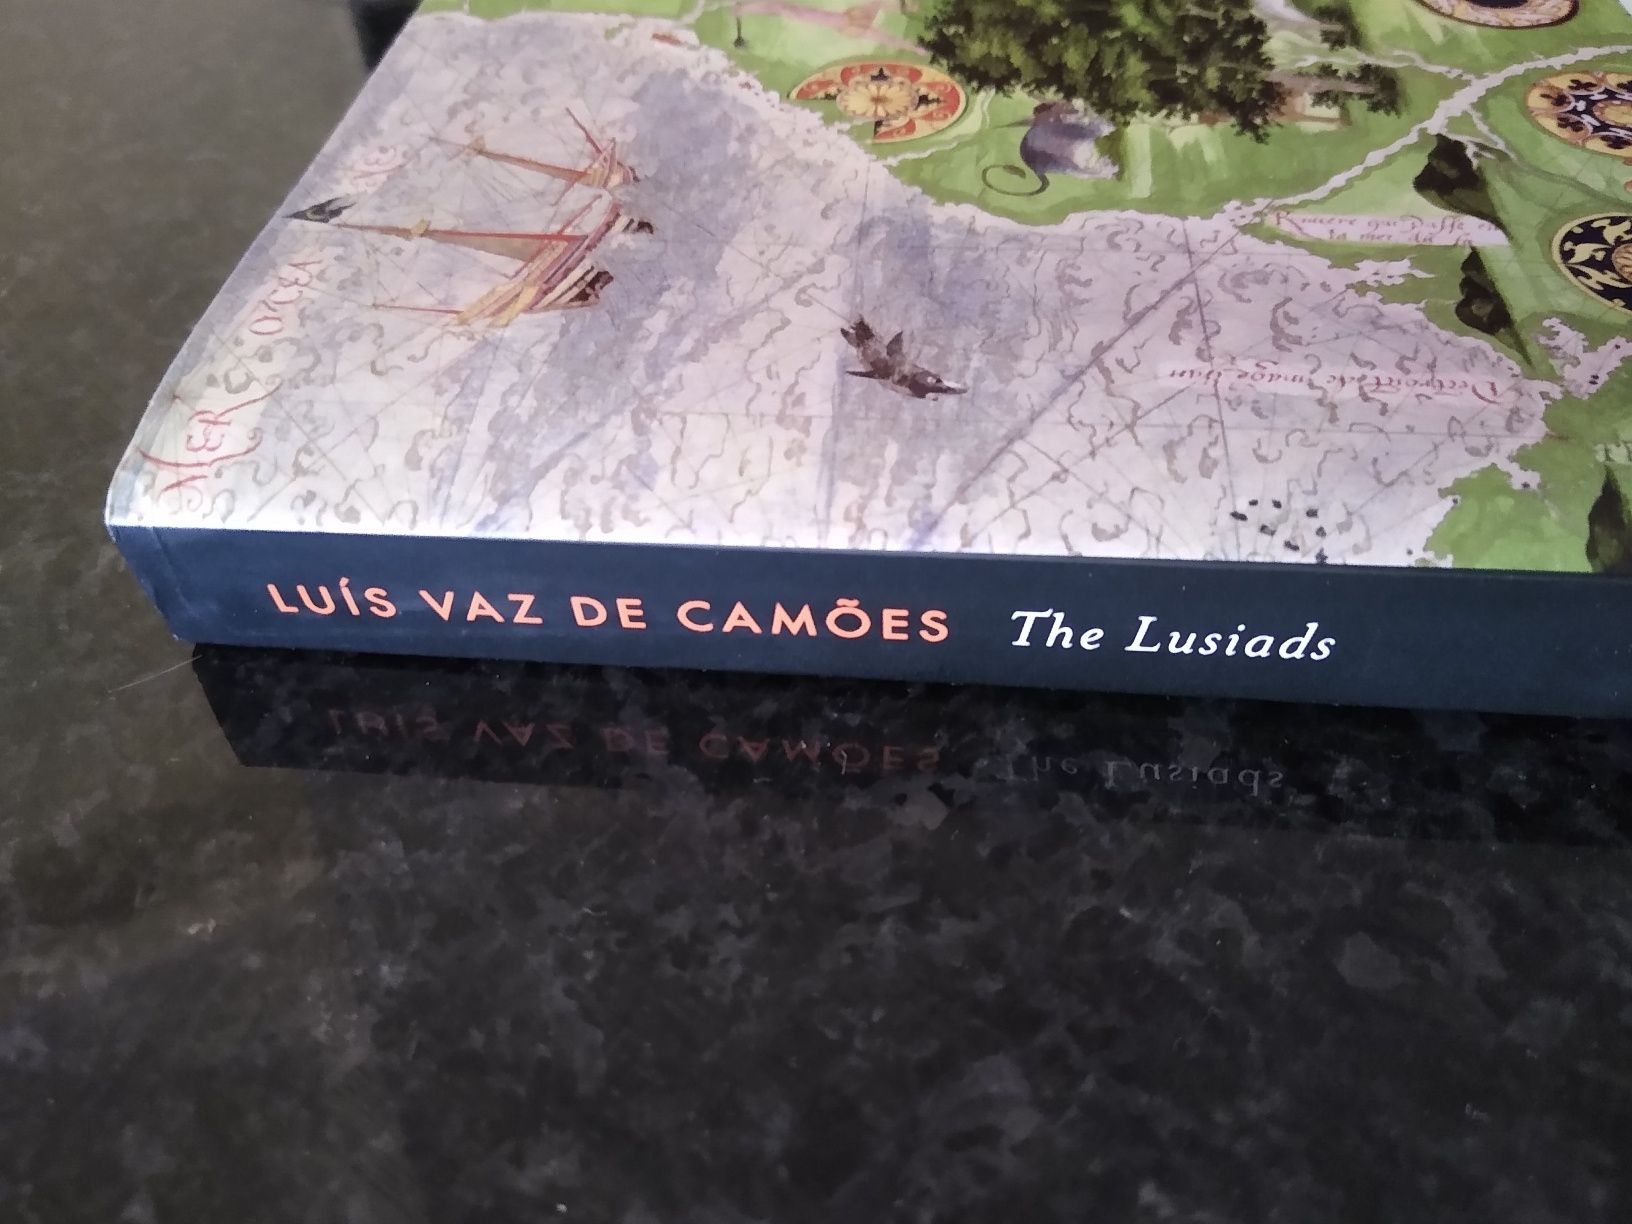 The Lusiads - Luís Vaz de Camões